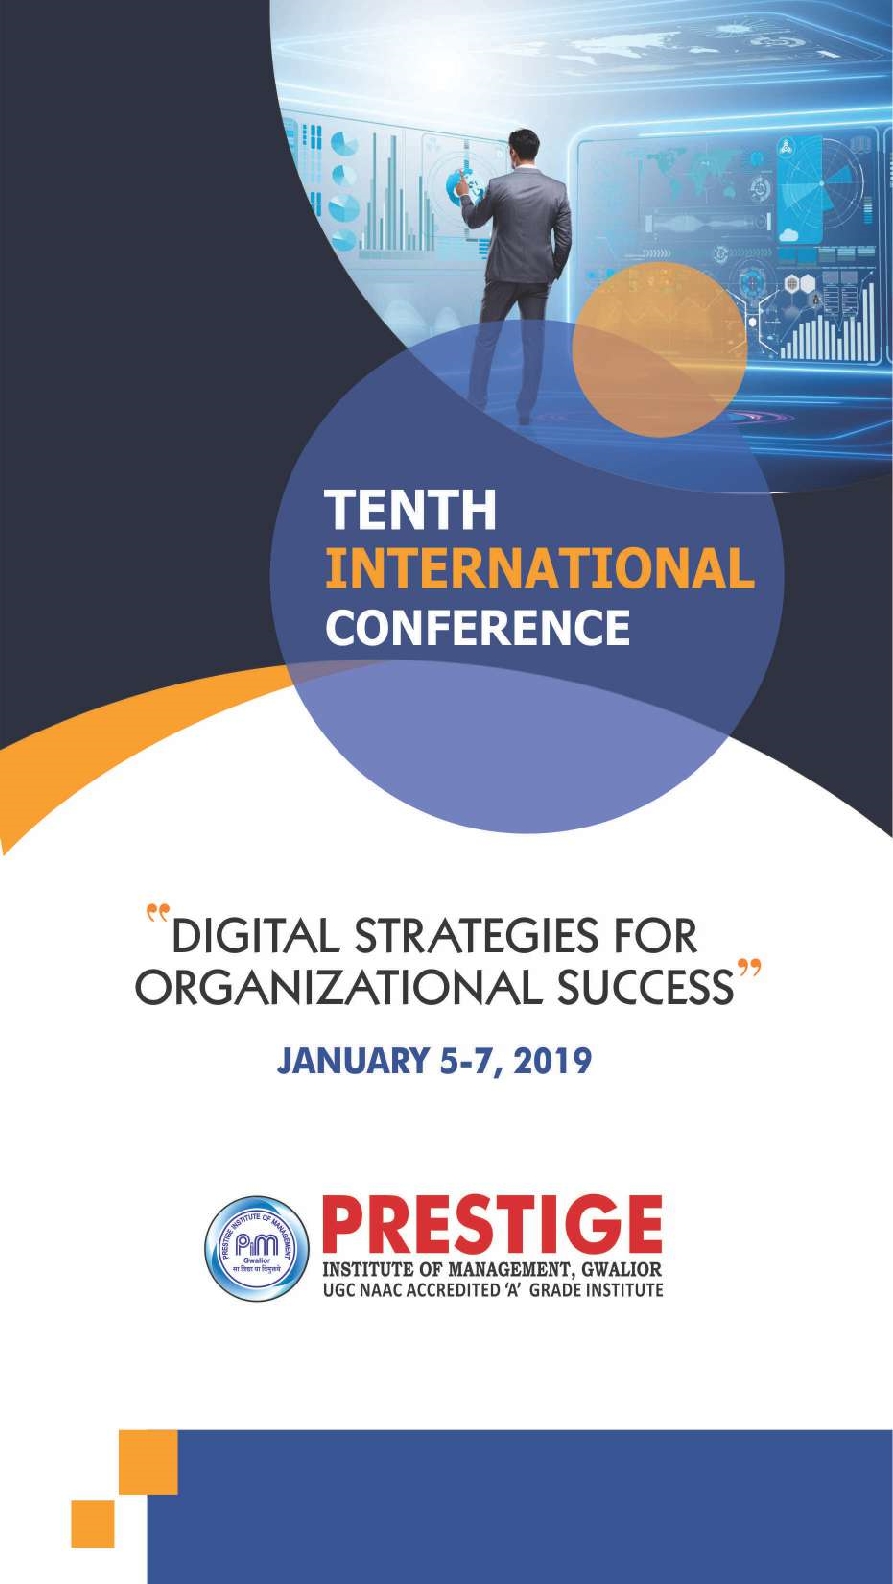 10th International Conference 2019 "Digital Strategies for Organizational Success", Gwalior, Madhya Pradesh, India